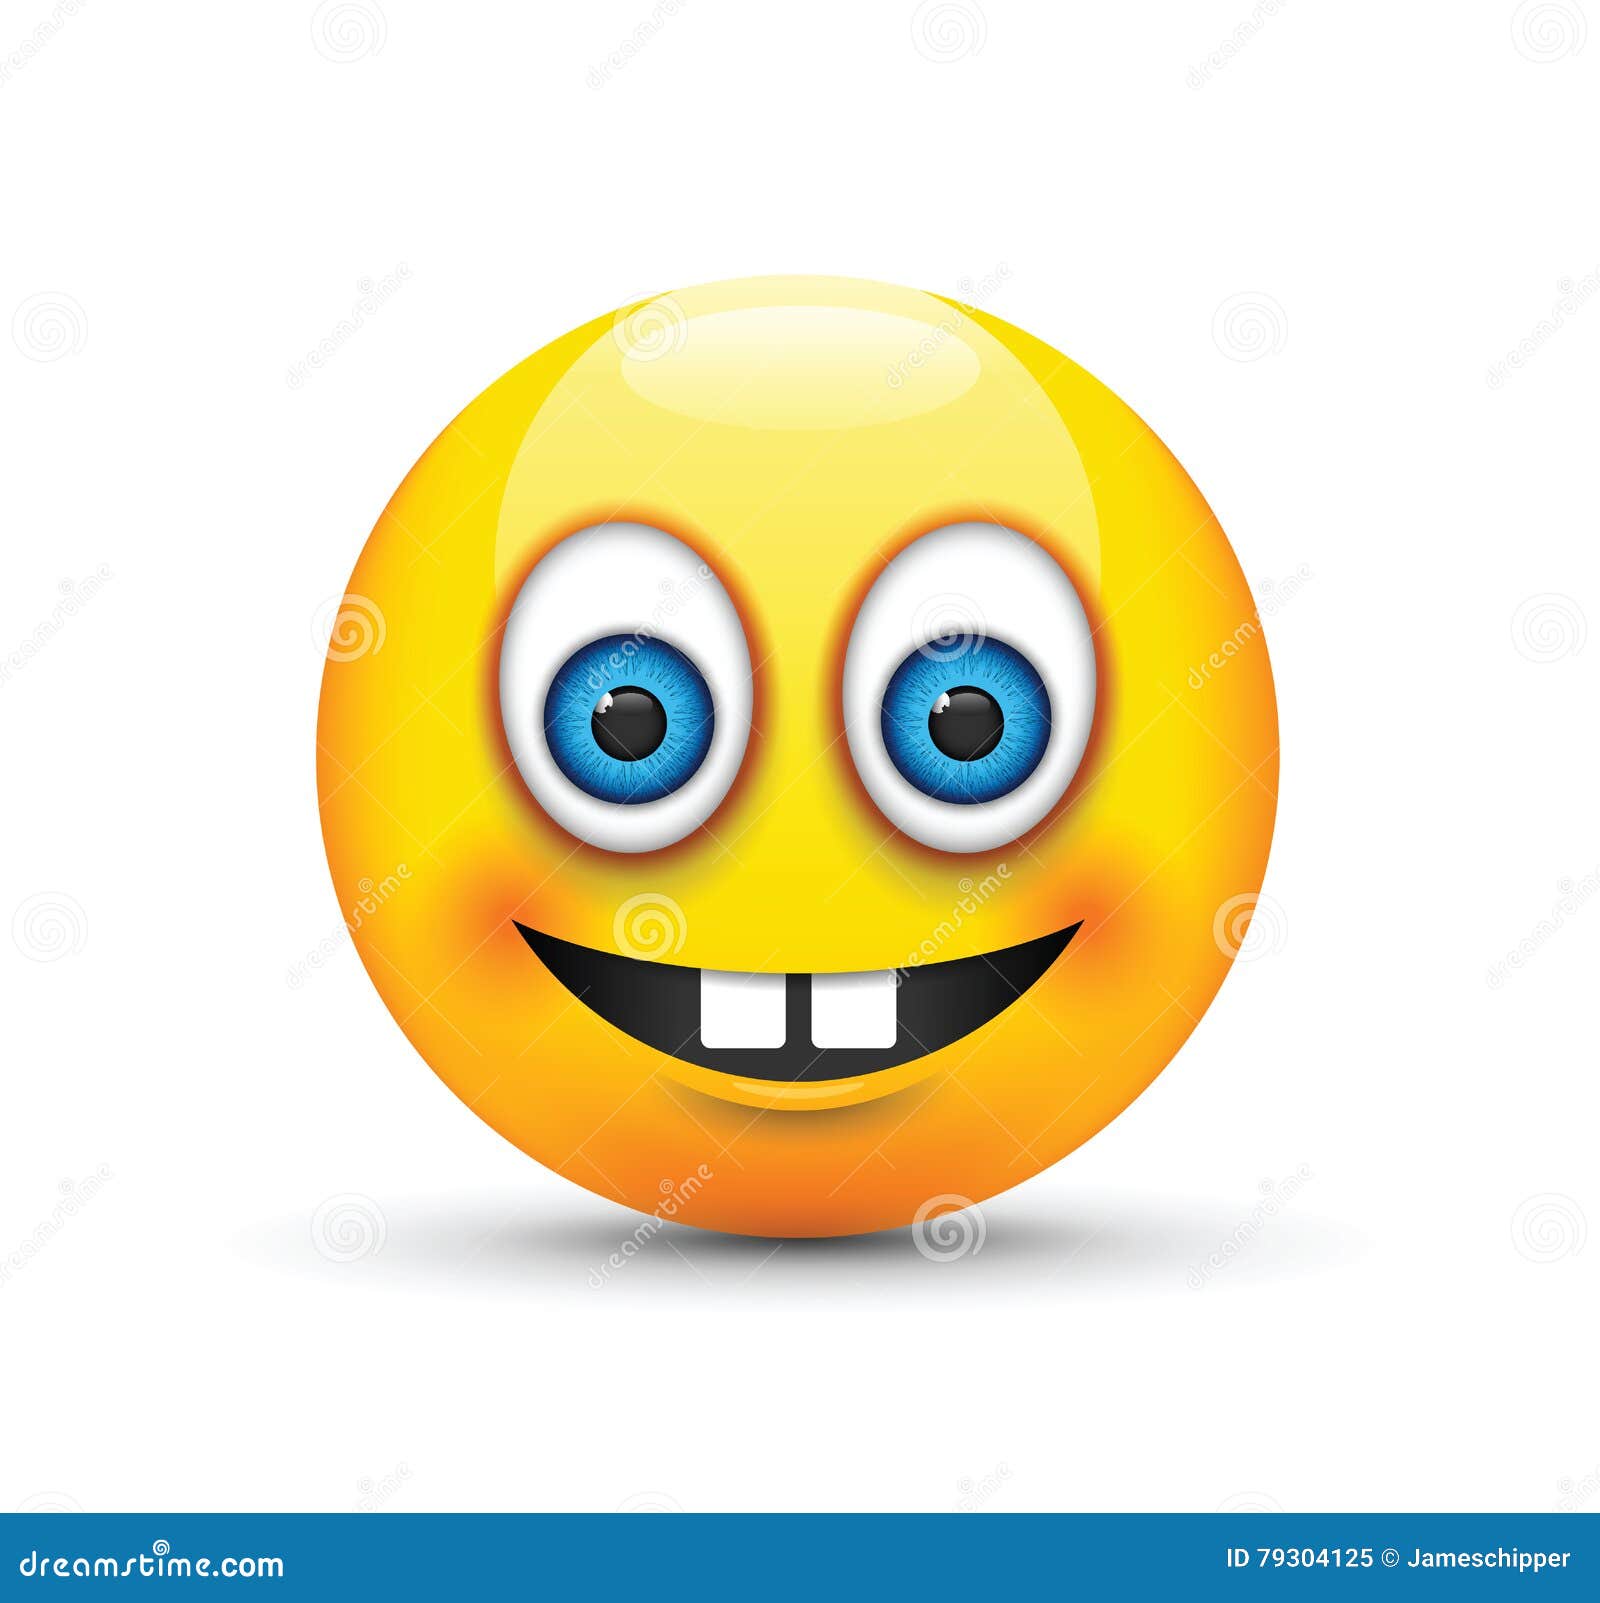 Crazy emoji stock vector. Illustration of sign, emoticons - 79304125
